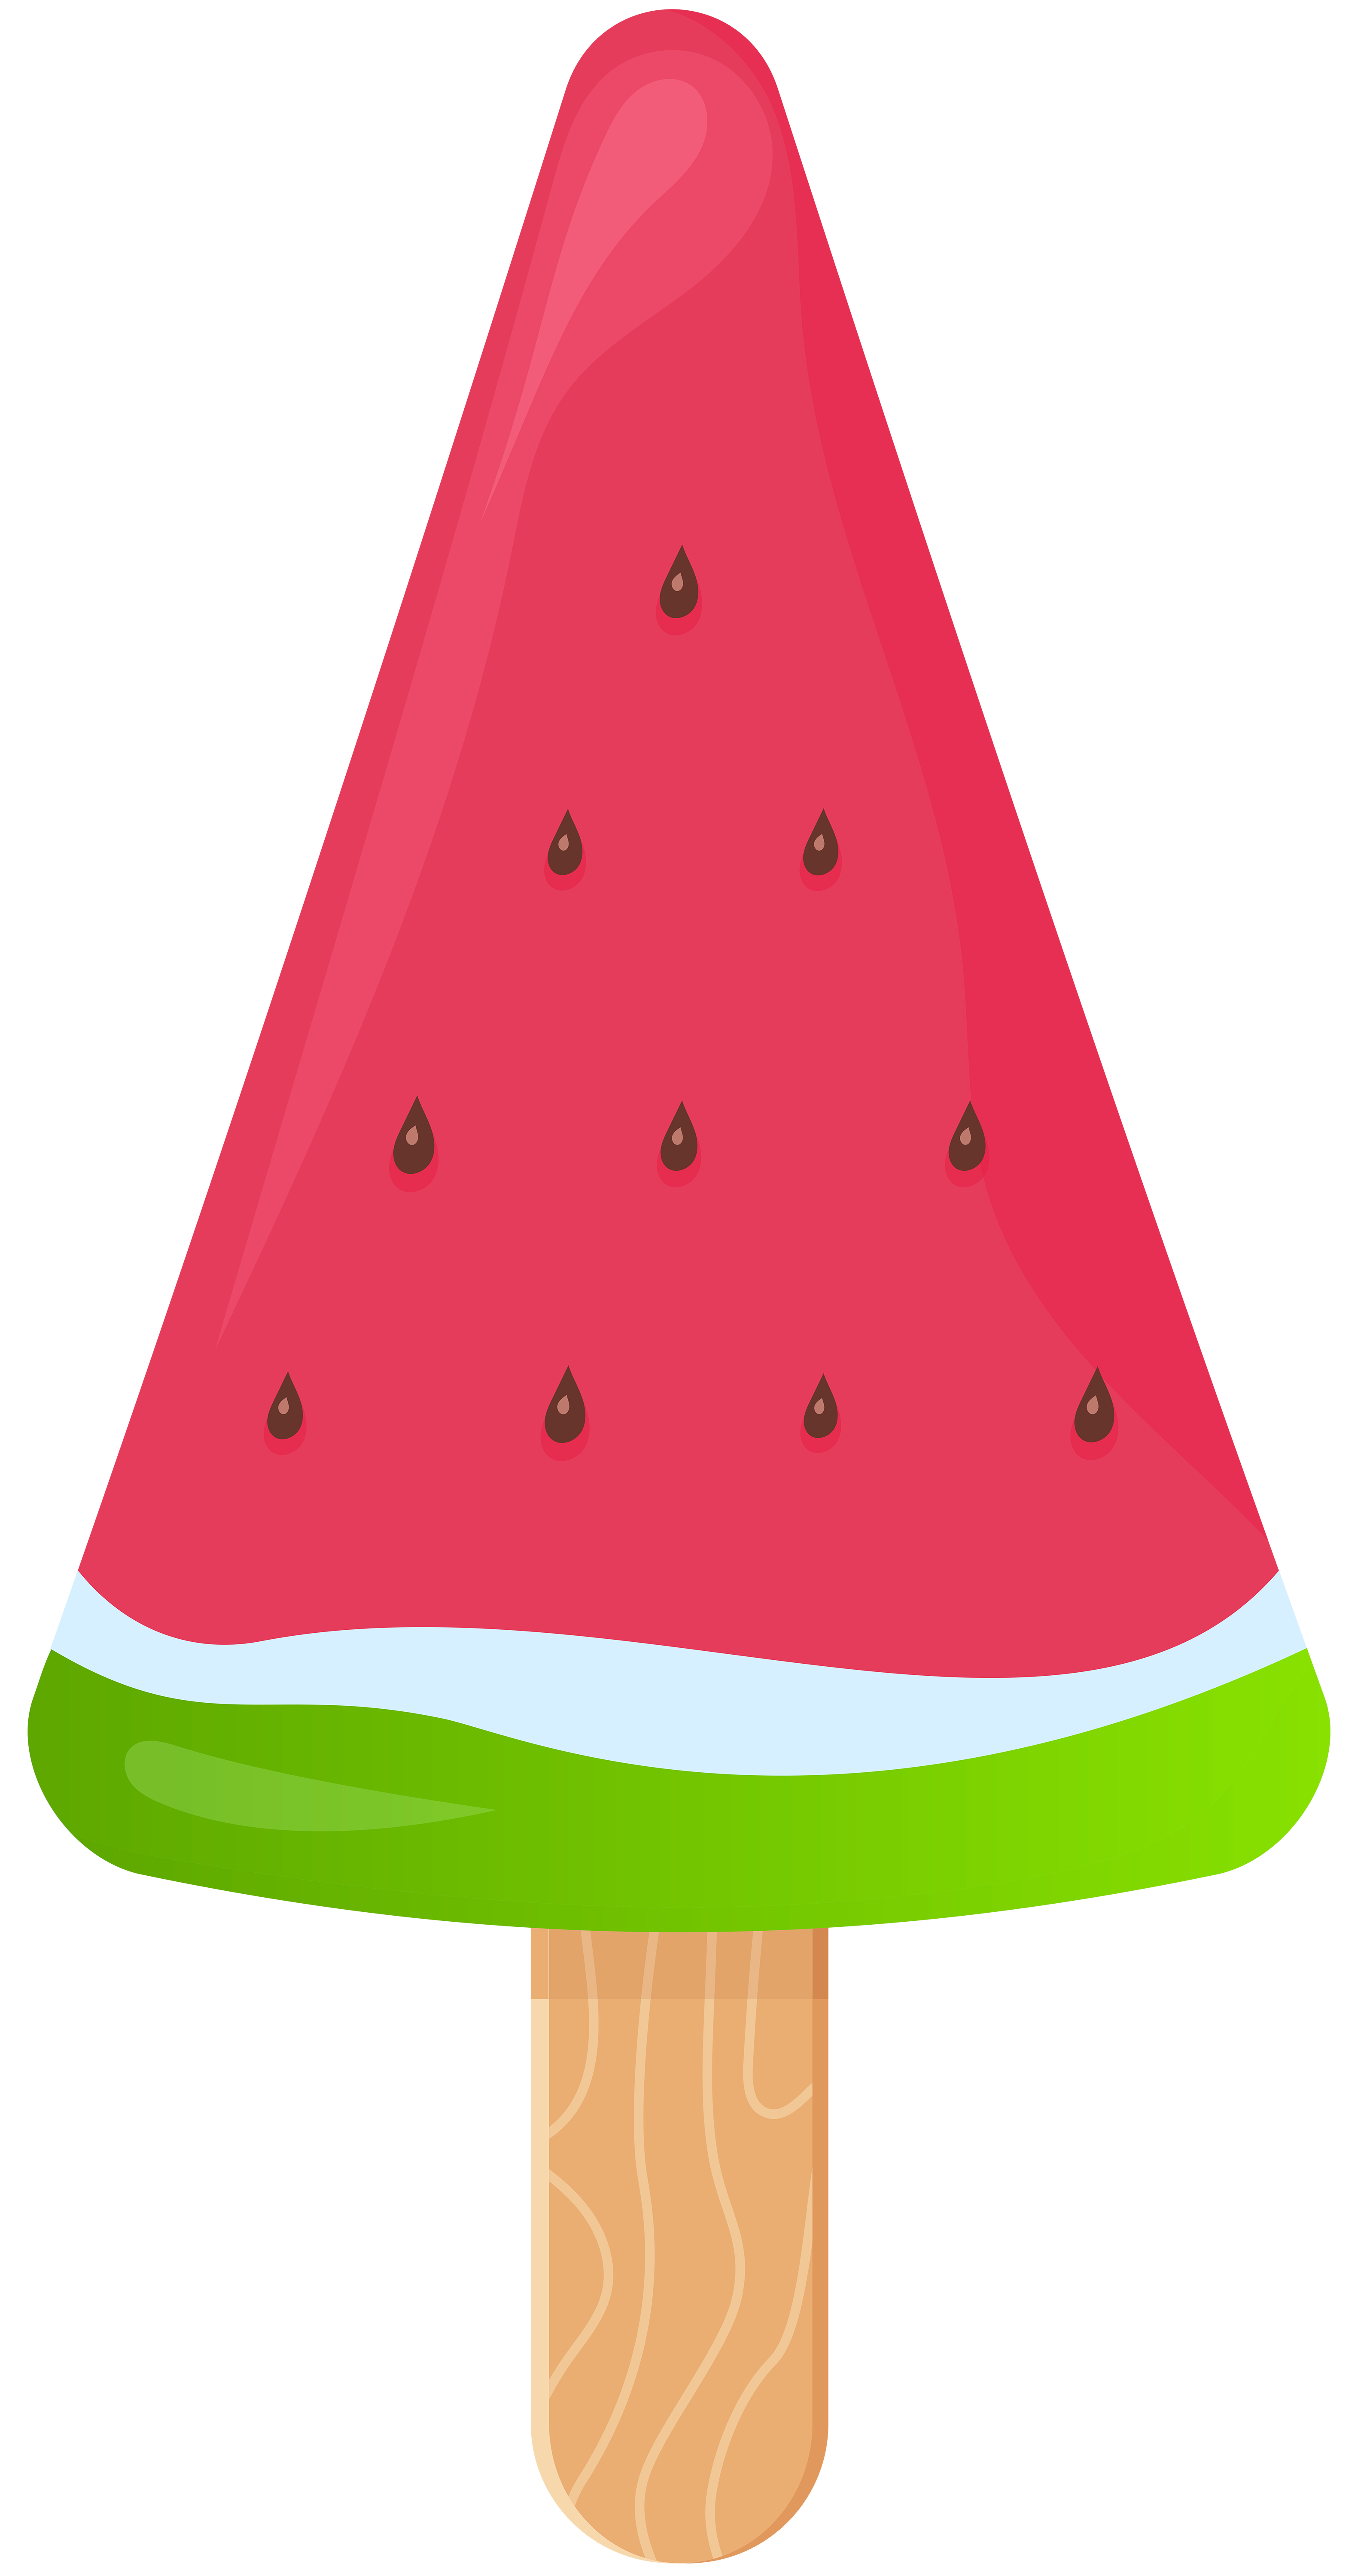 Design watermelon frames illustrations. Clipart snowflake bmp